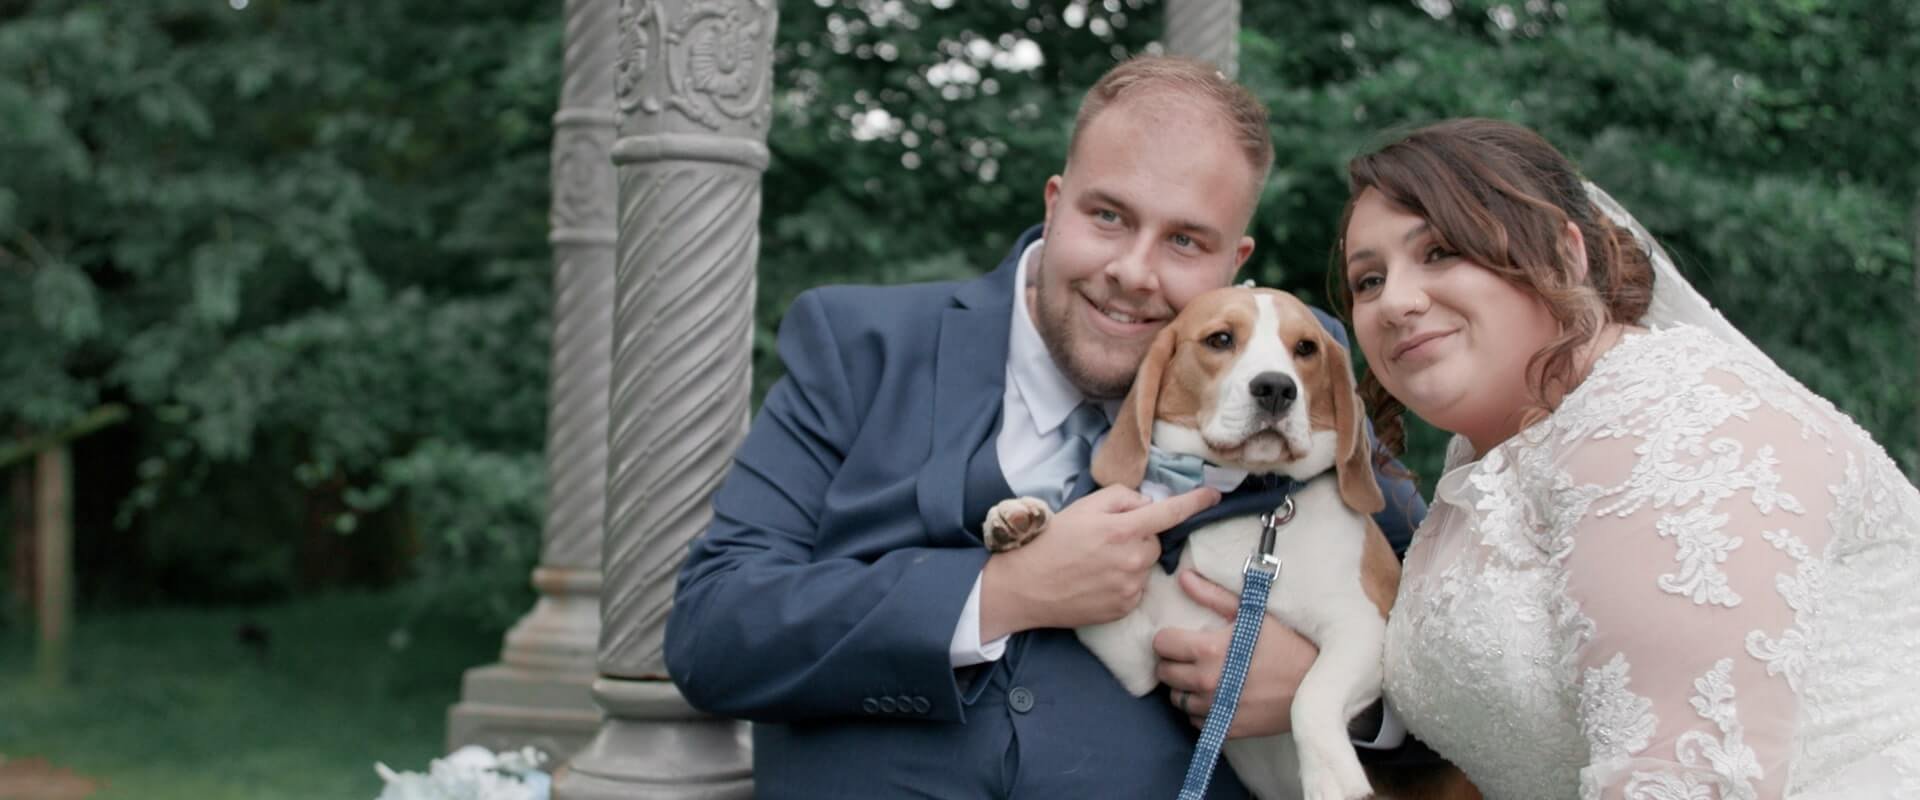 Jade, Jordan and their Beagle dog Hugo pose for wedding photos